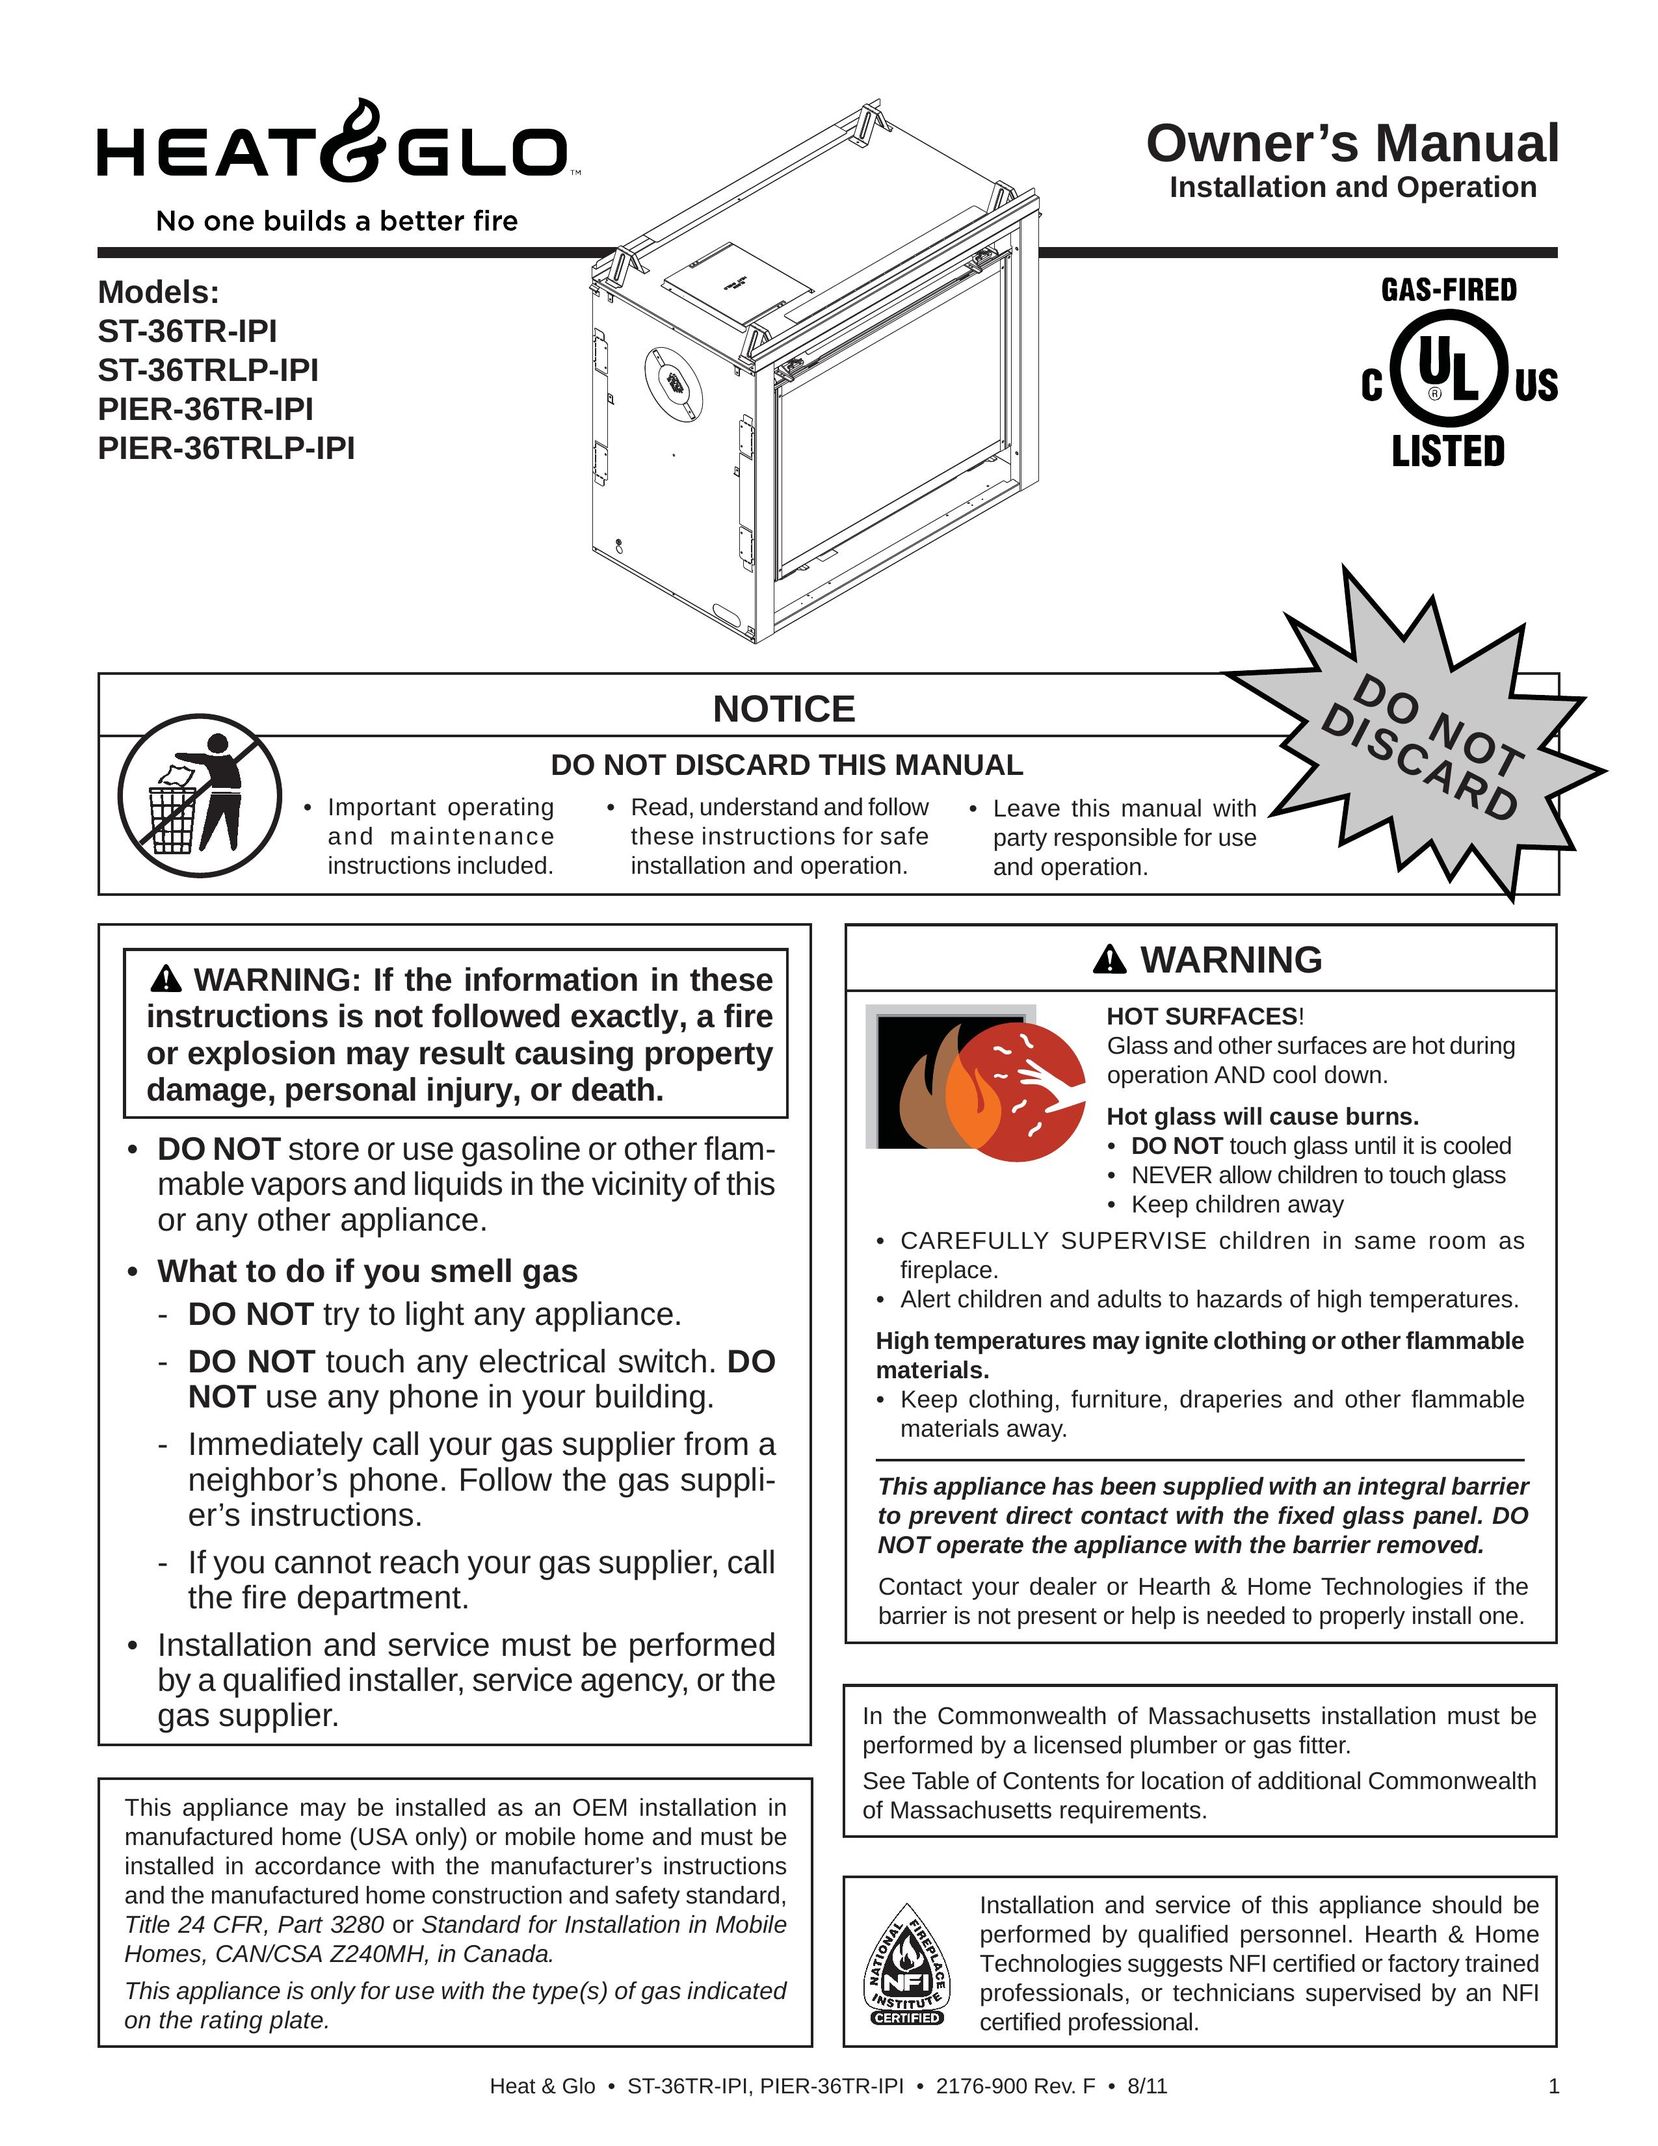 Heat & Glo LifeStyle ST-36TR-IPI Burner User Manual